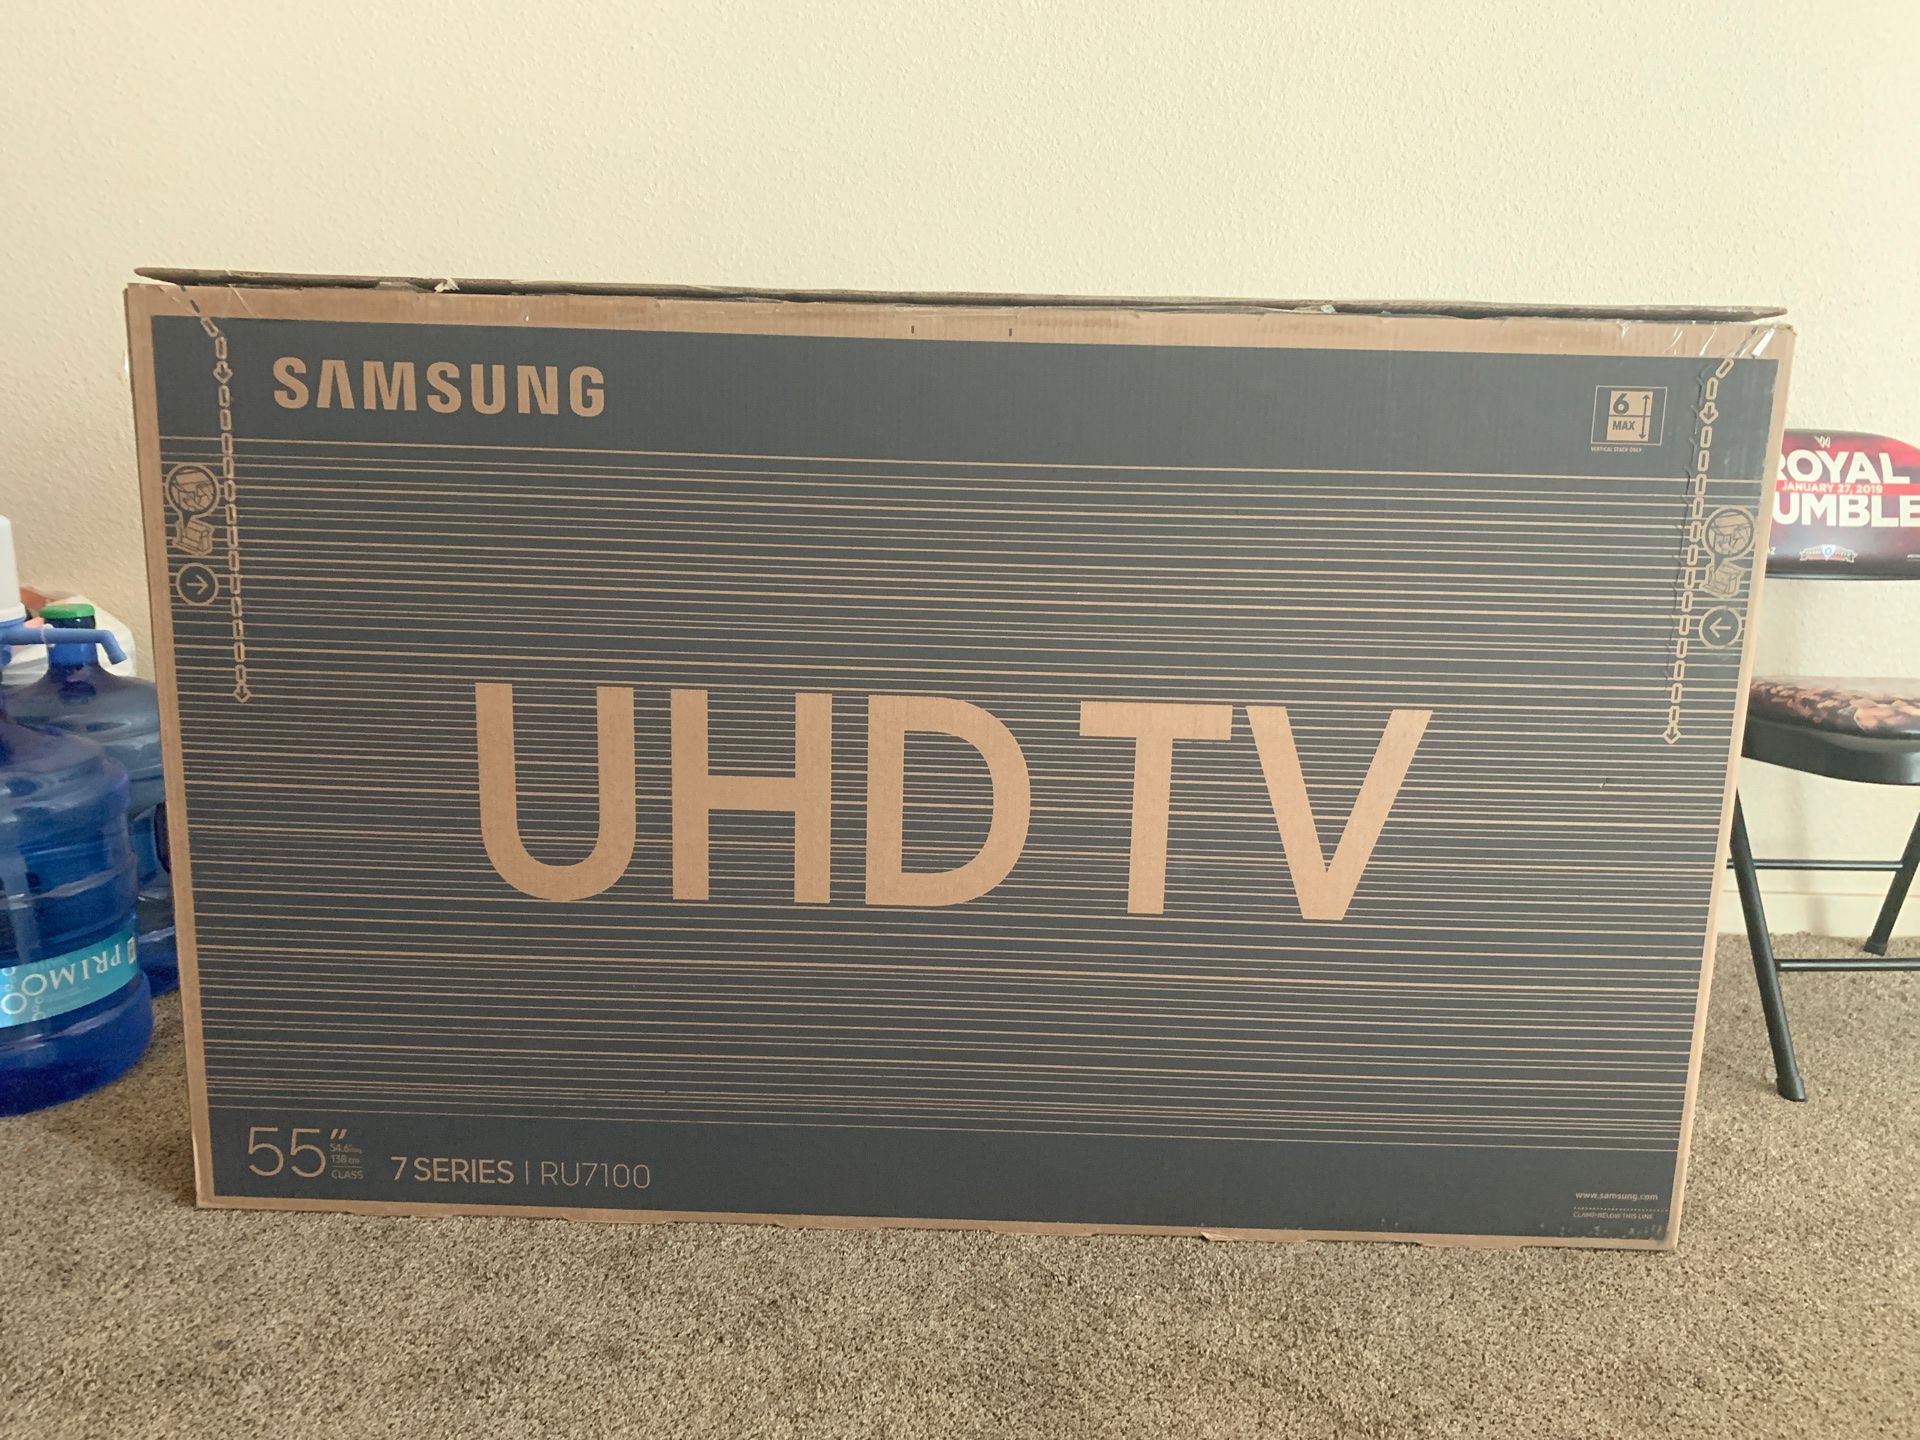 Samsung 55” inch 7 series UHD TV